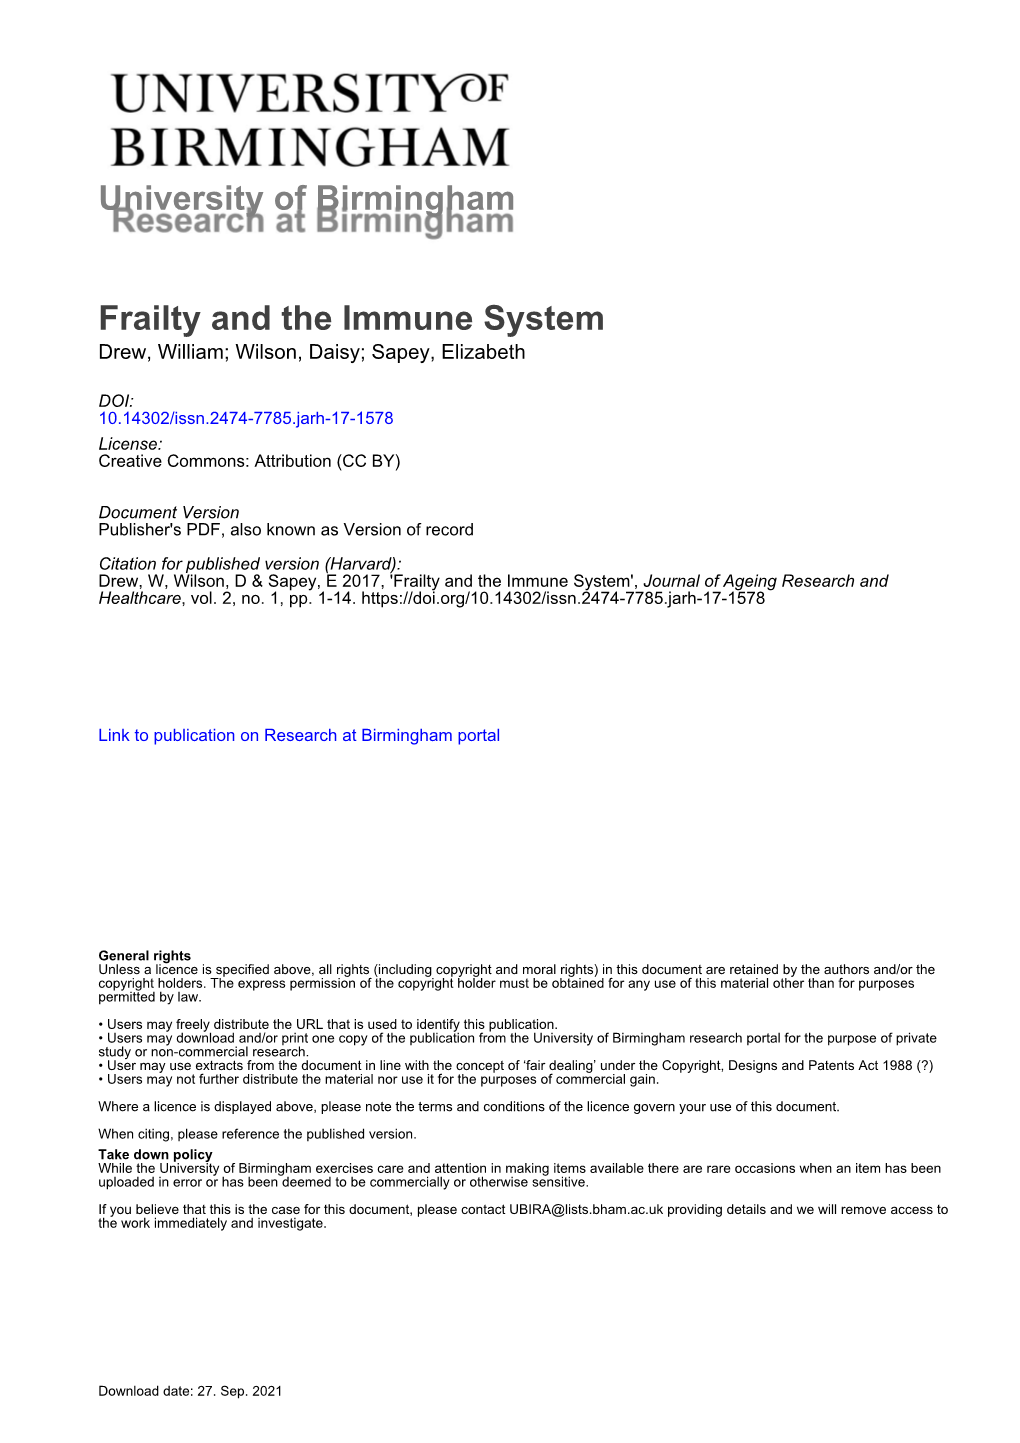 University of Birmingham Frailty and the Immune System